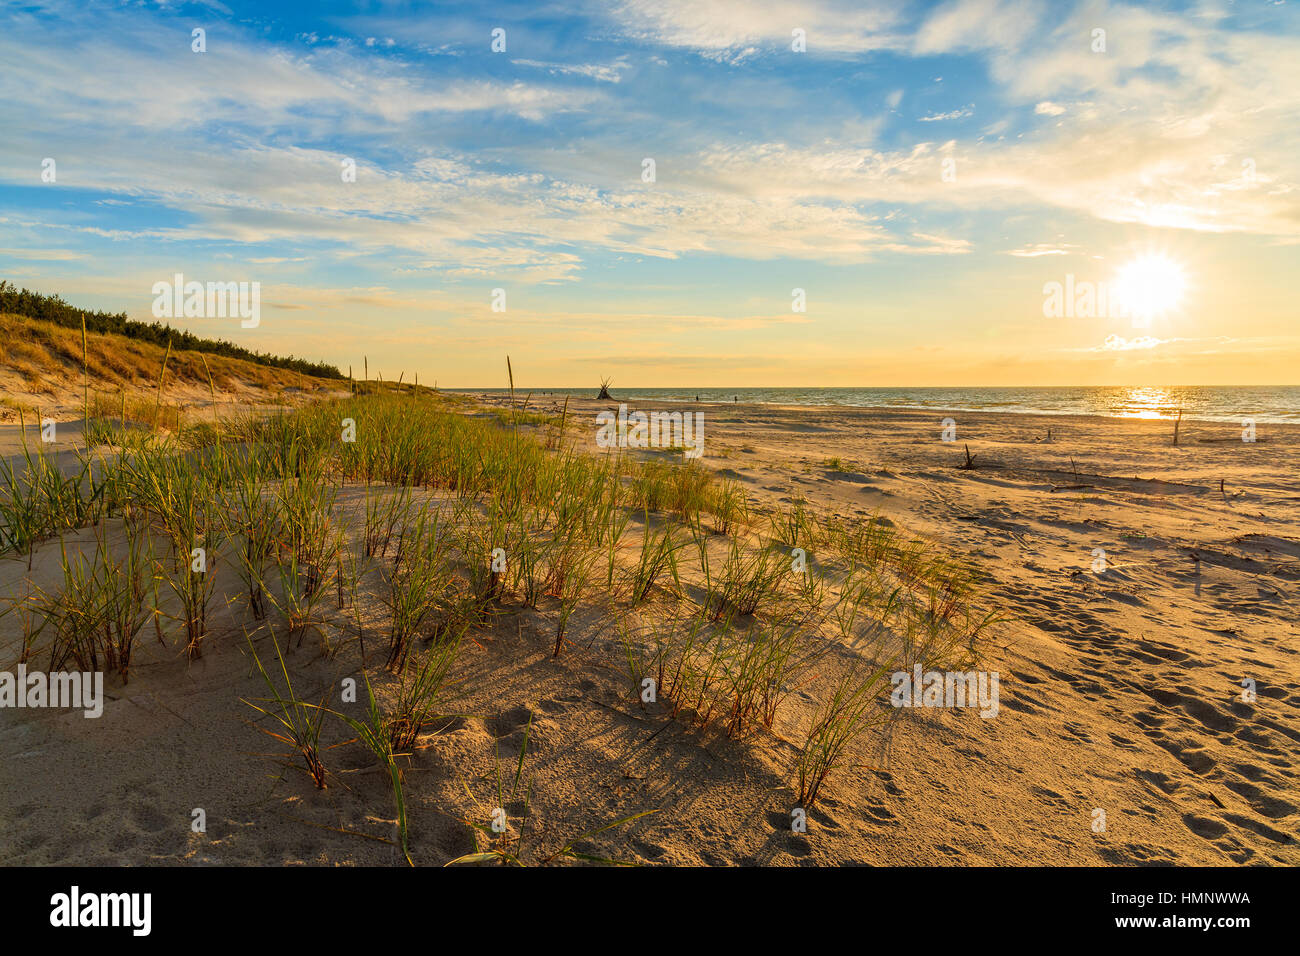 Grass on sand dune at sunset time, Leba beach, Baltic Sea, Poland Stock Photo